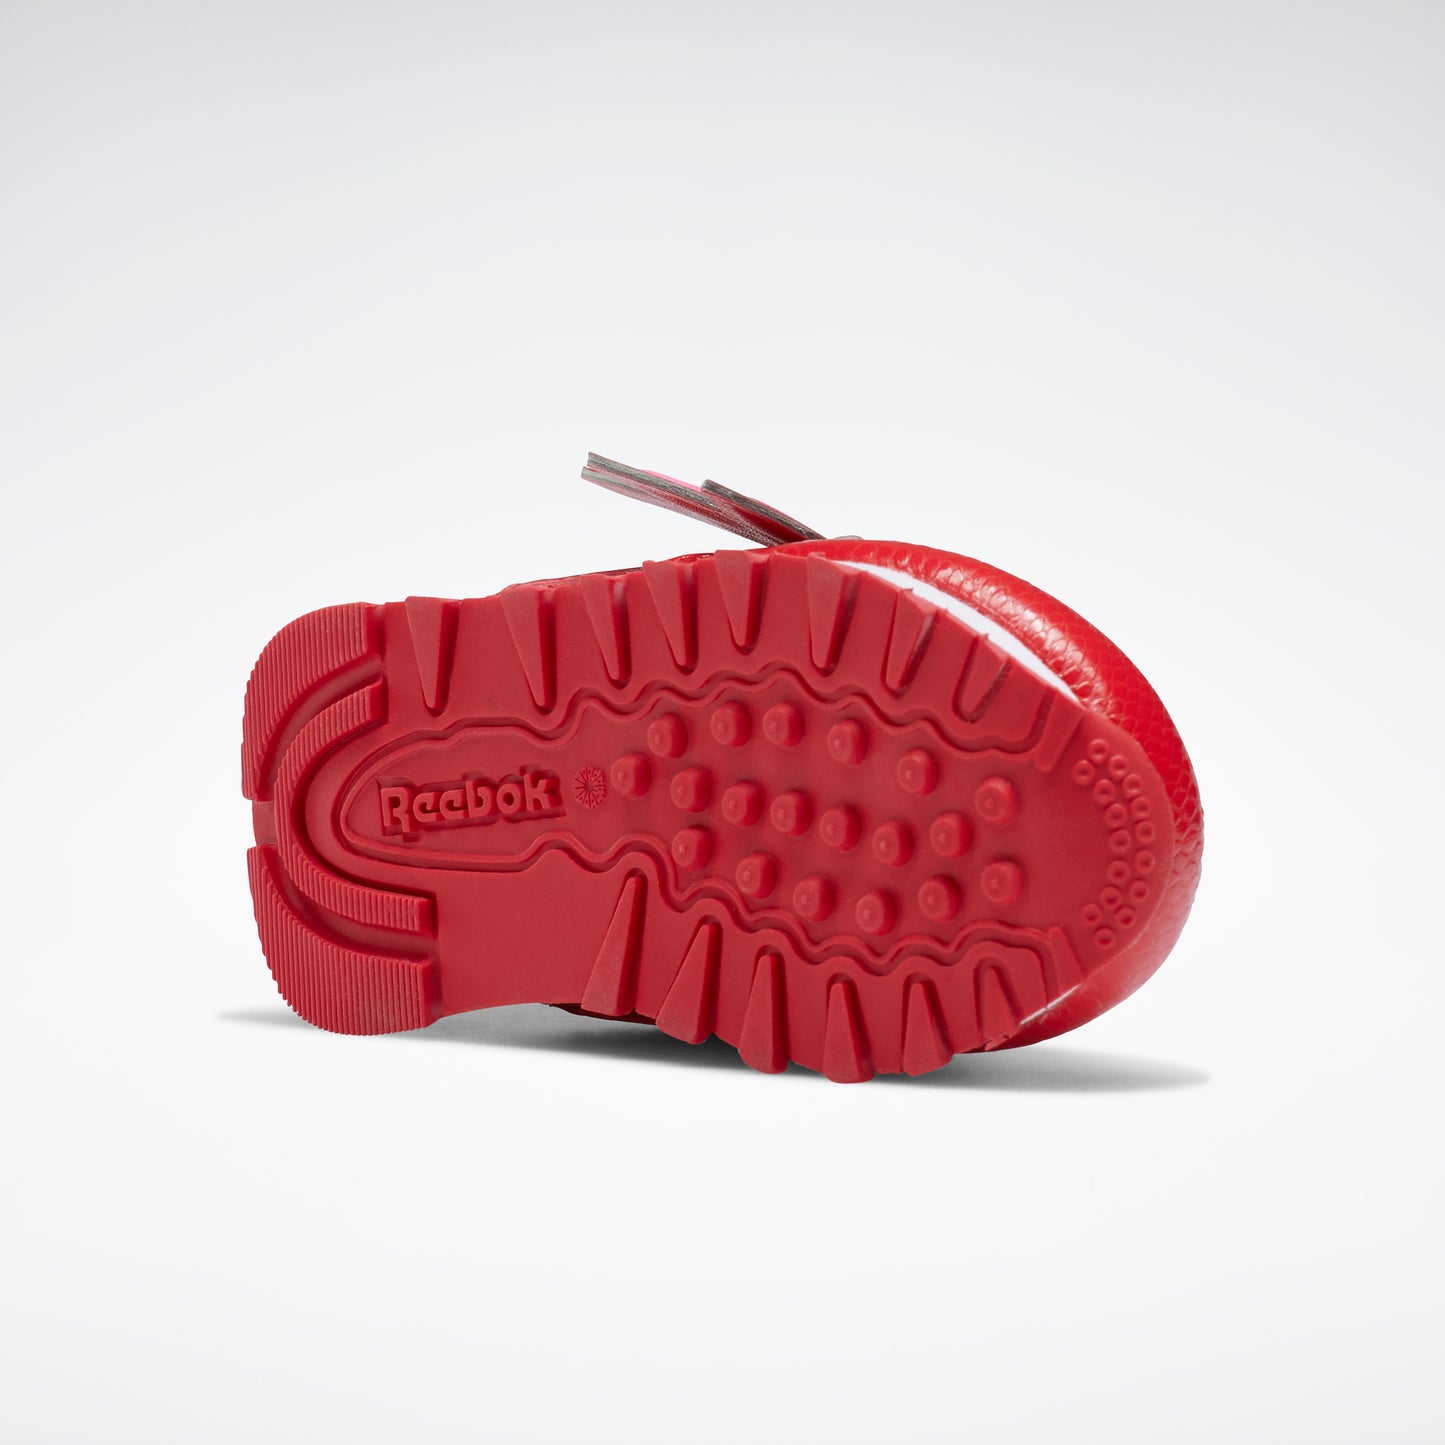 Reebok Footwear Kids Pj Masks Classic Leather Shoes Infant Vecred/Suppnk/Ftwwht